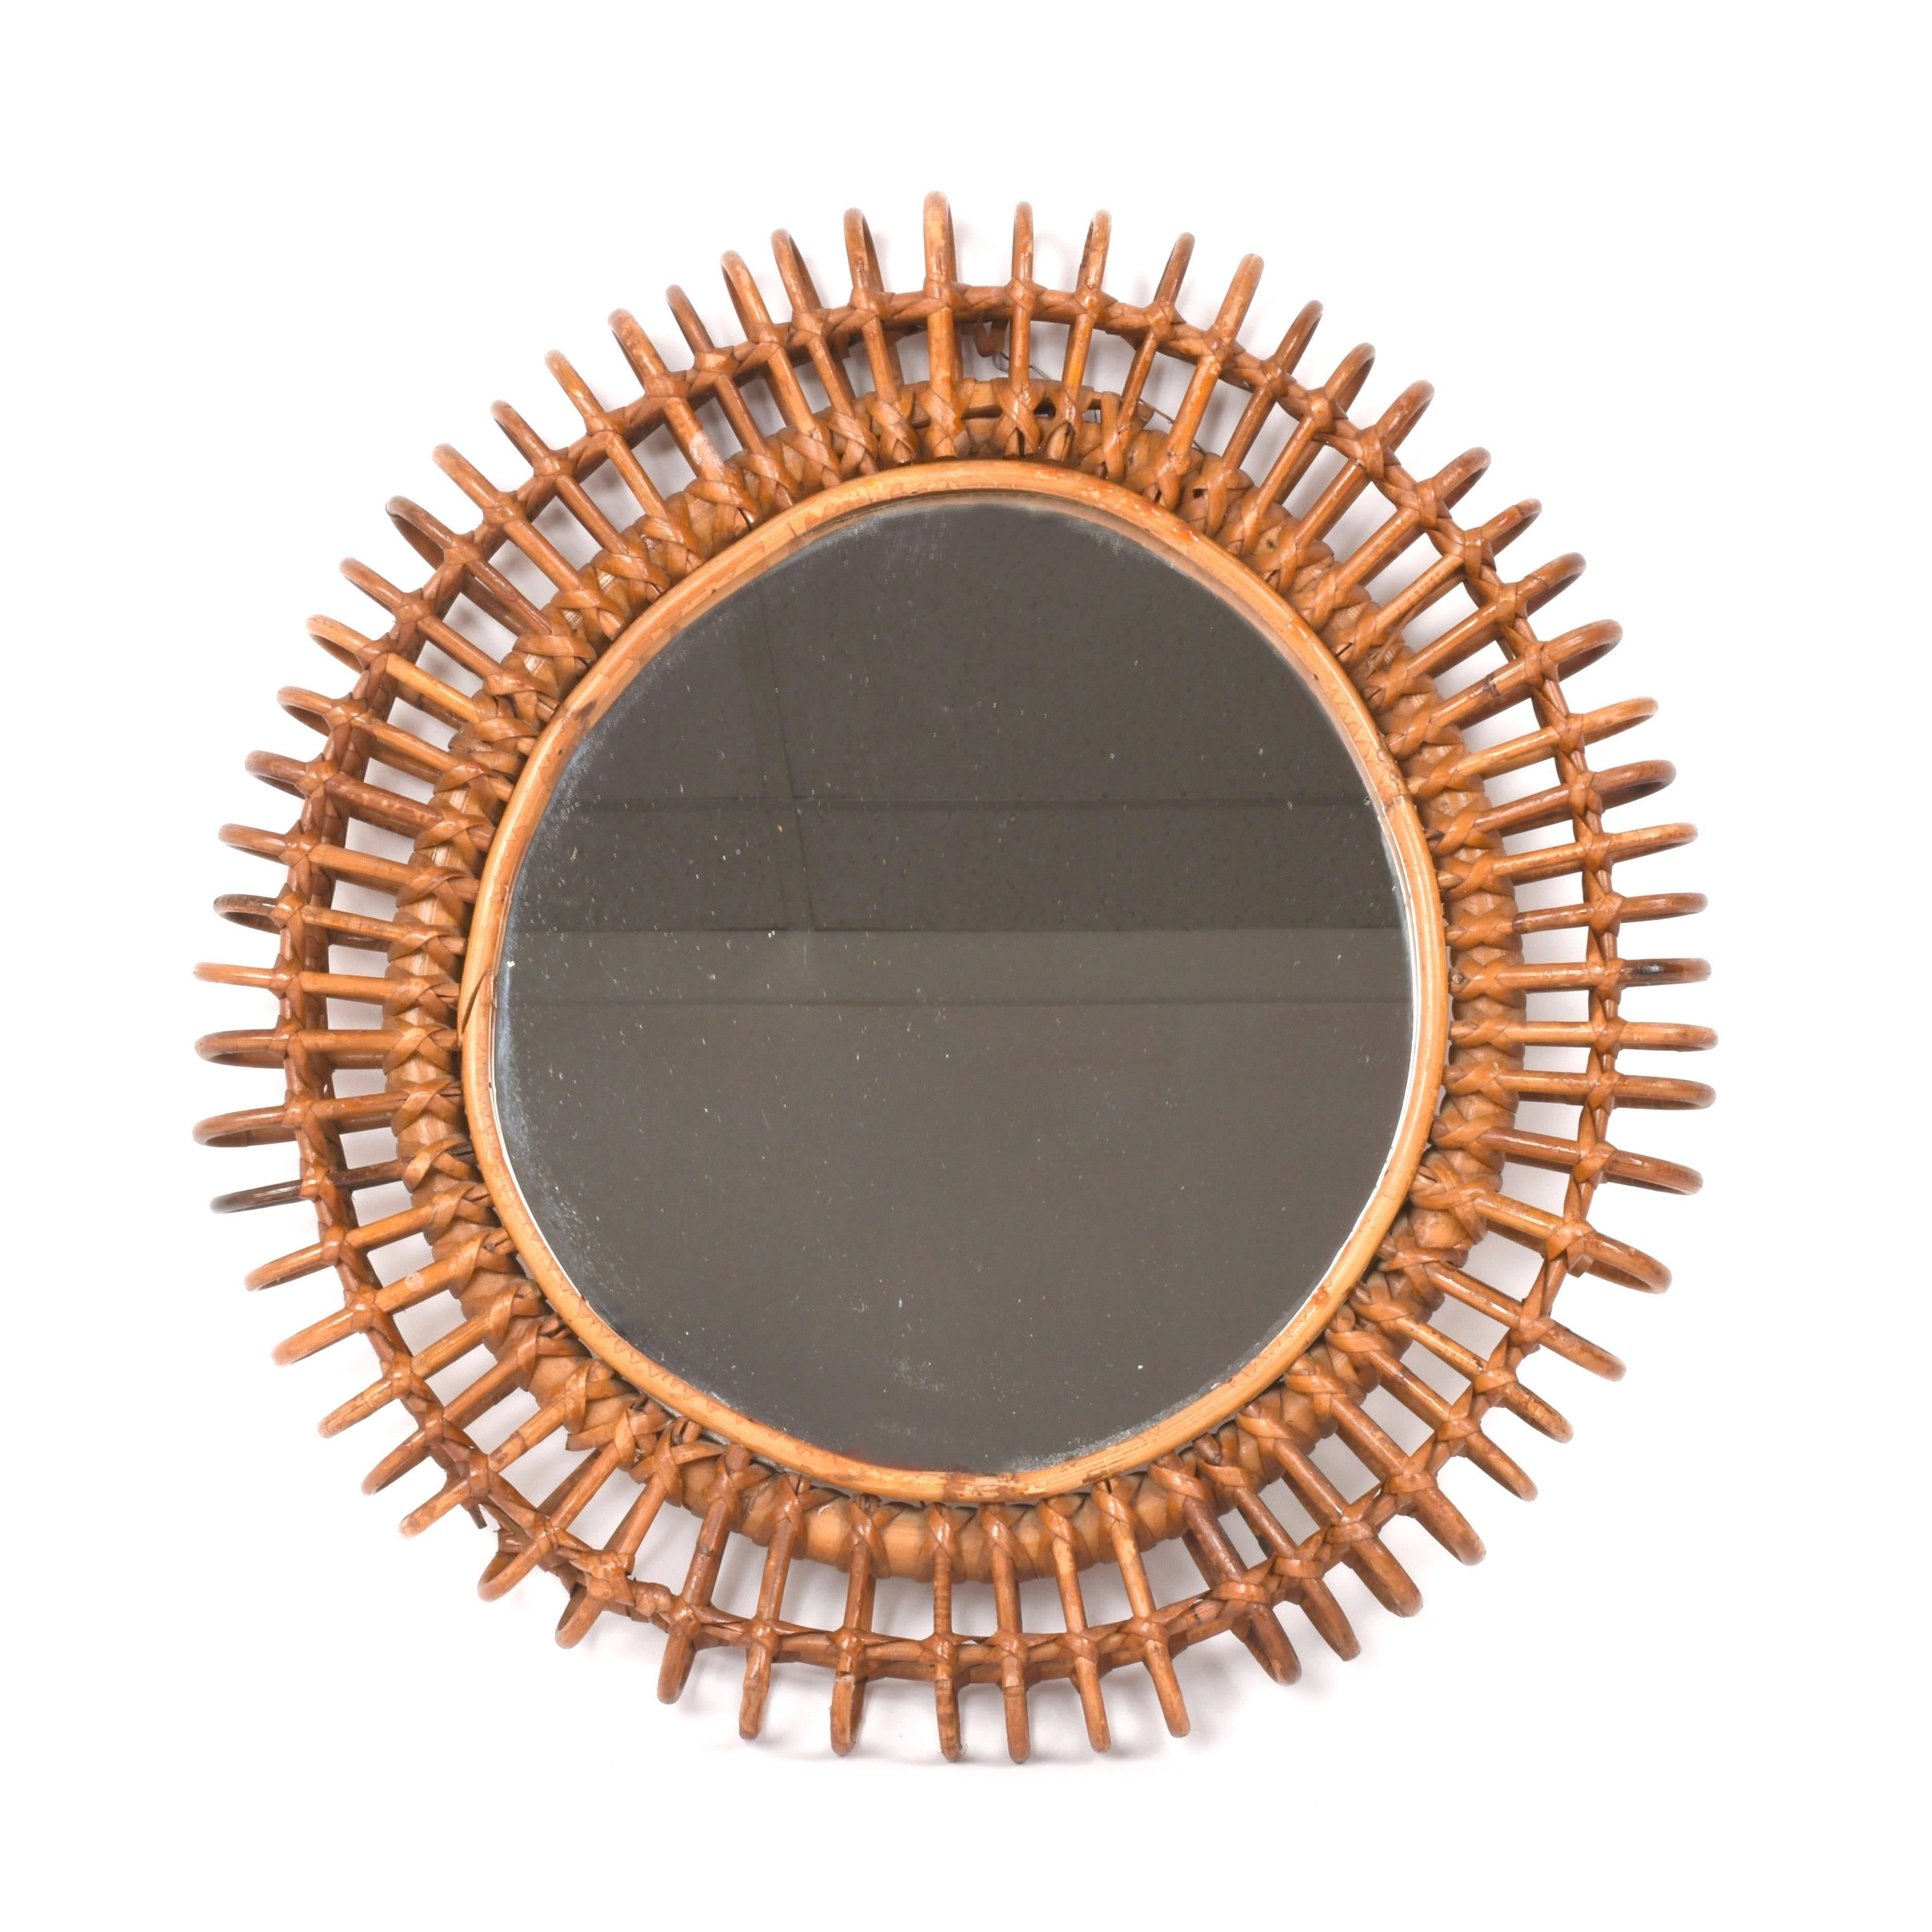 Round Italian rattan wall mirror attributed to Albini, 1970s, Mid-Century Modern.